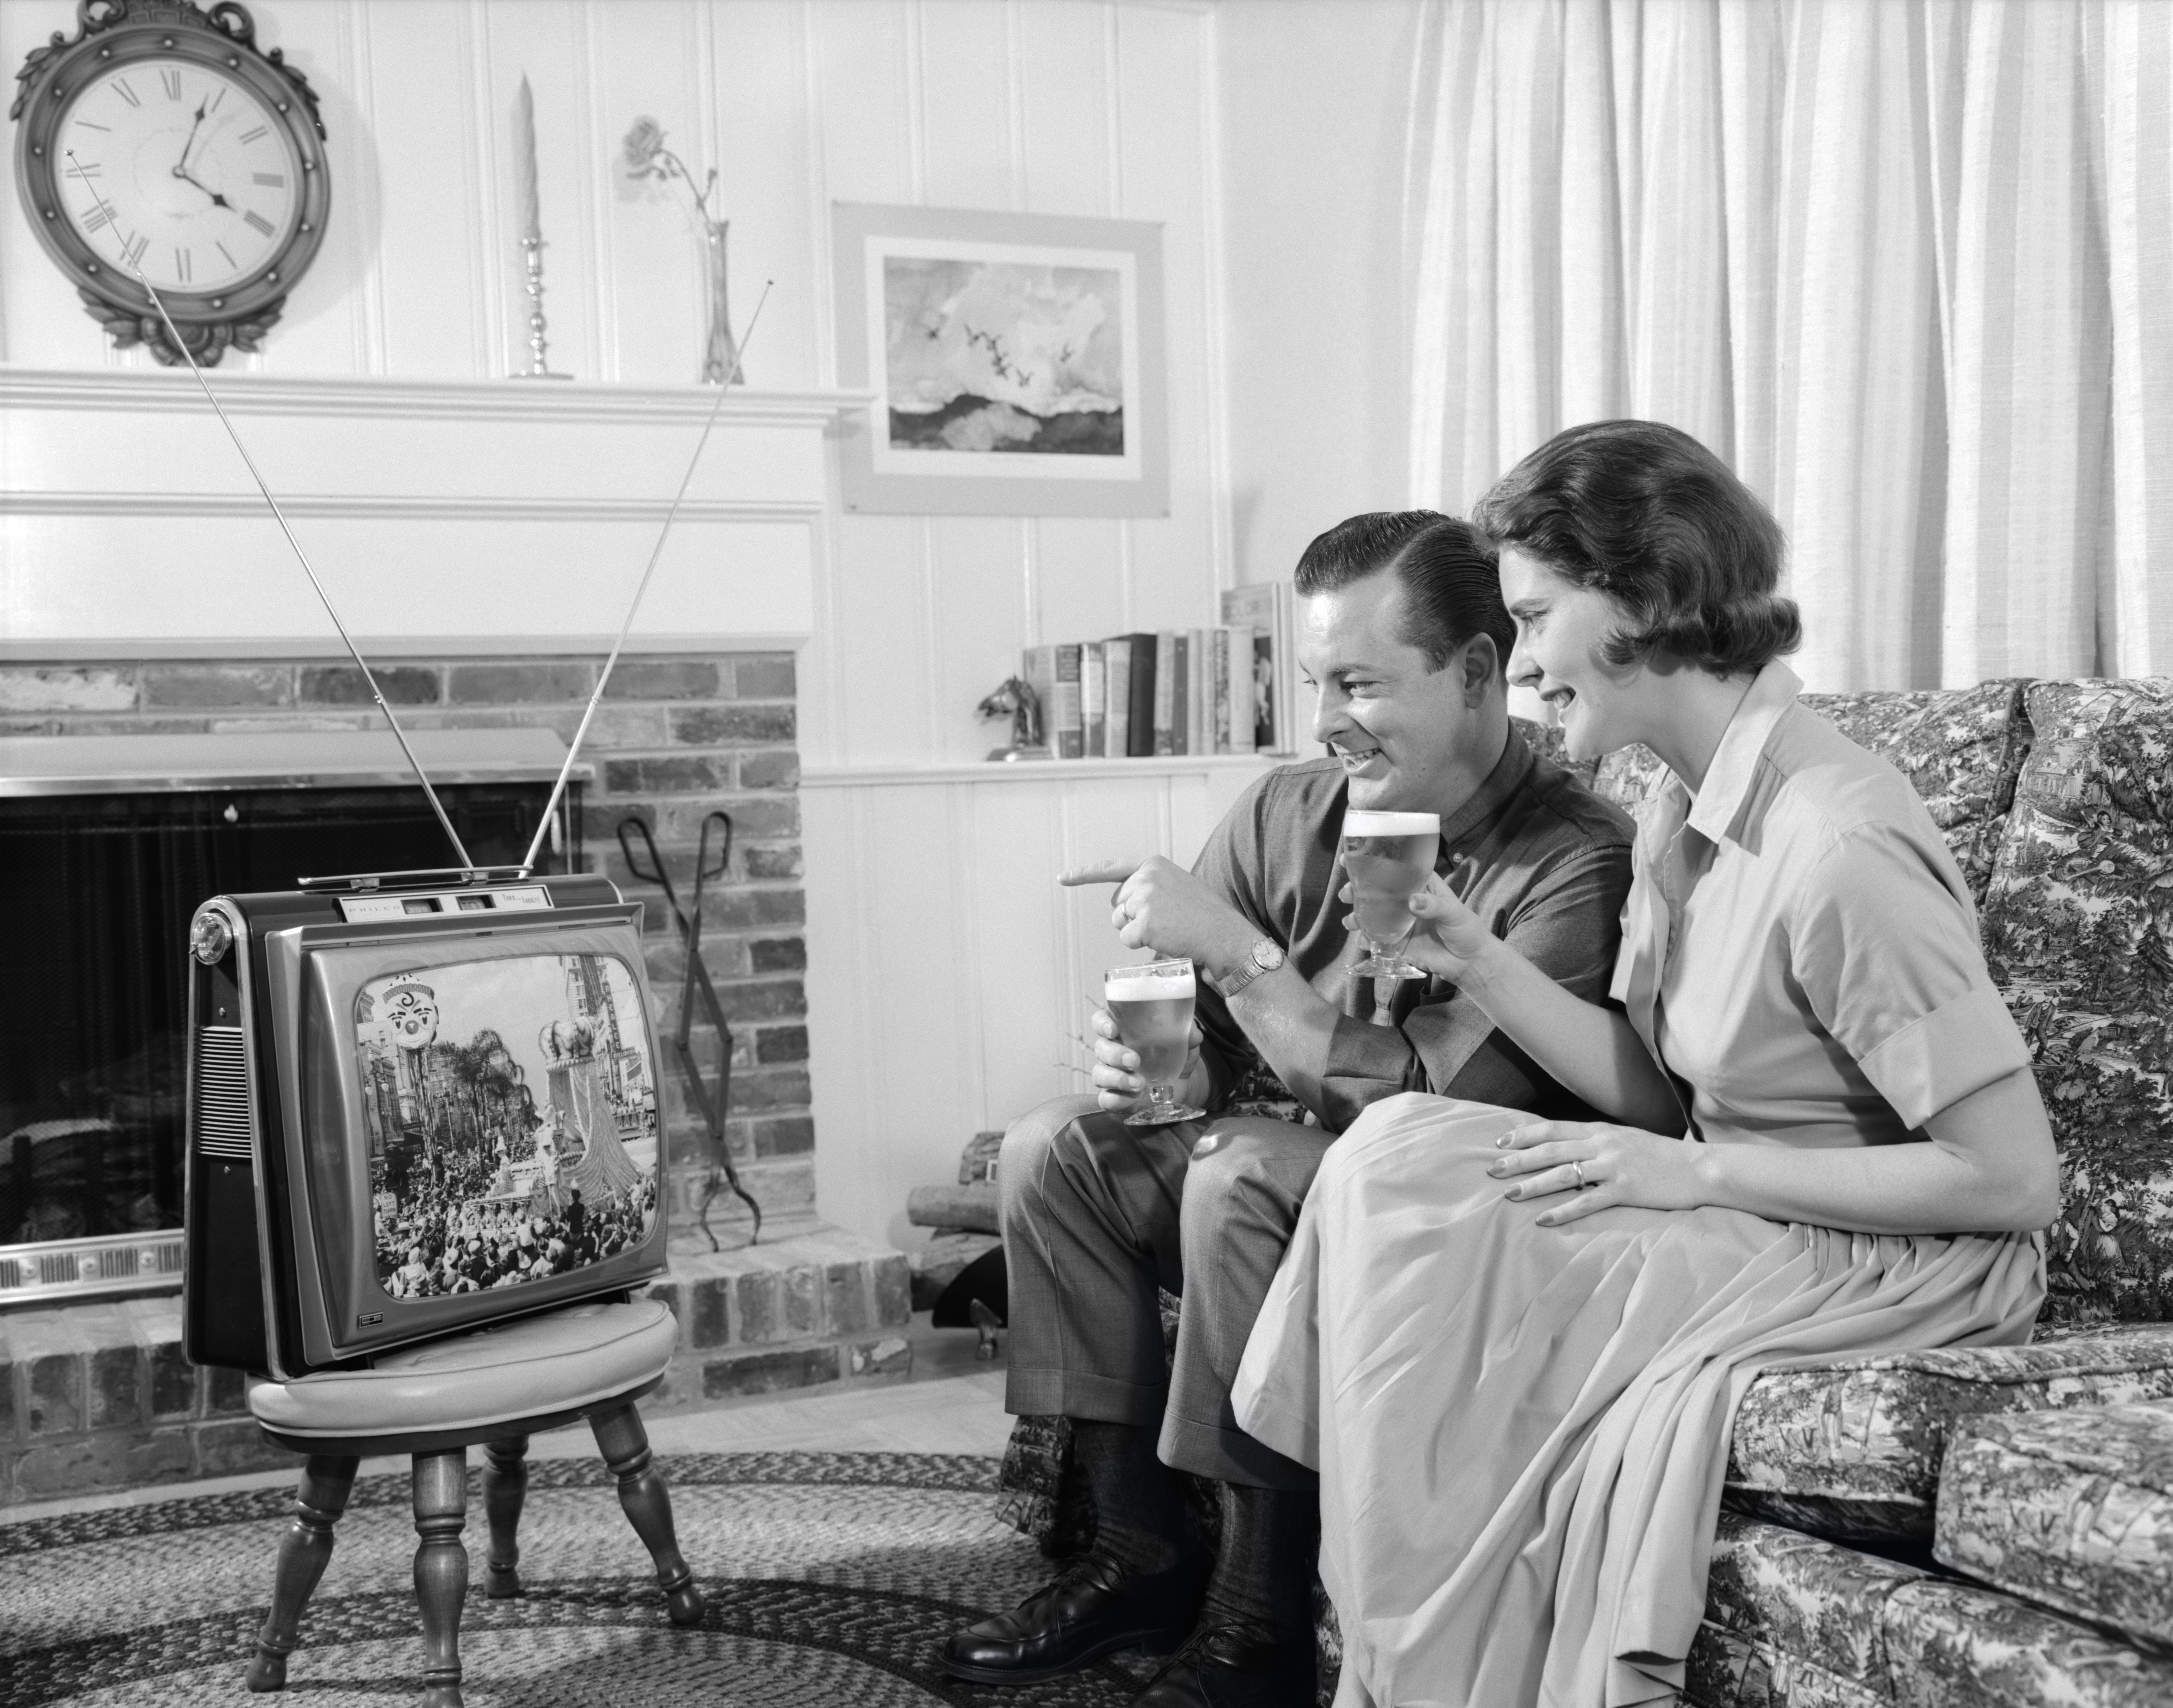 Television and newspapers. Ретро телевизор. Телевизор 1950-х годов. Телевизор 20 века. Старинный телевизор.